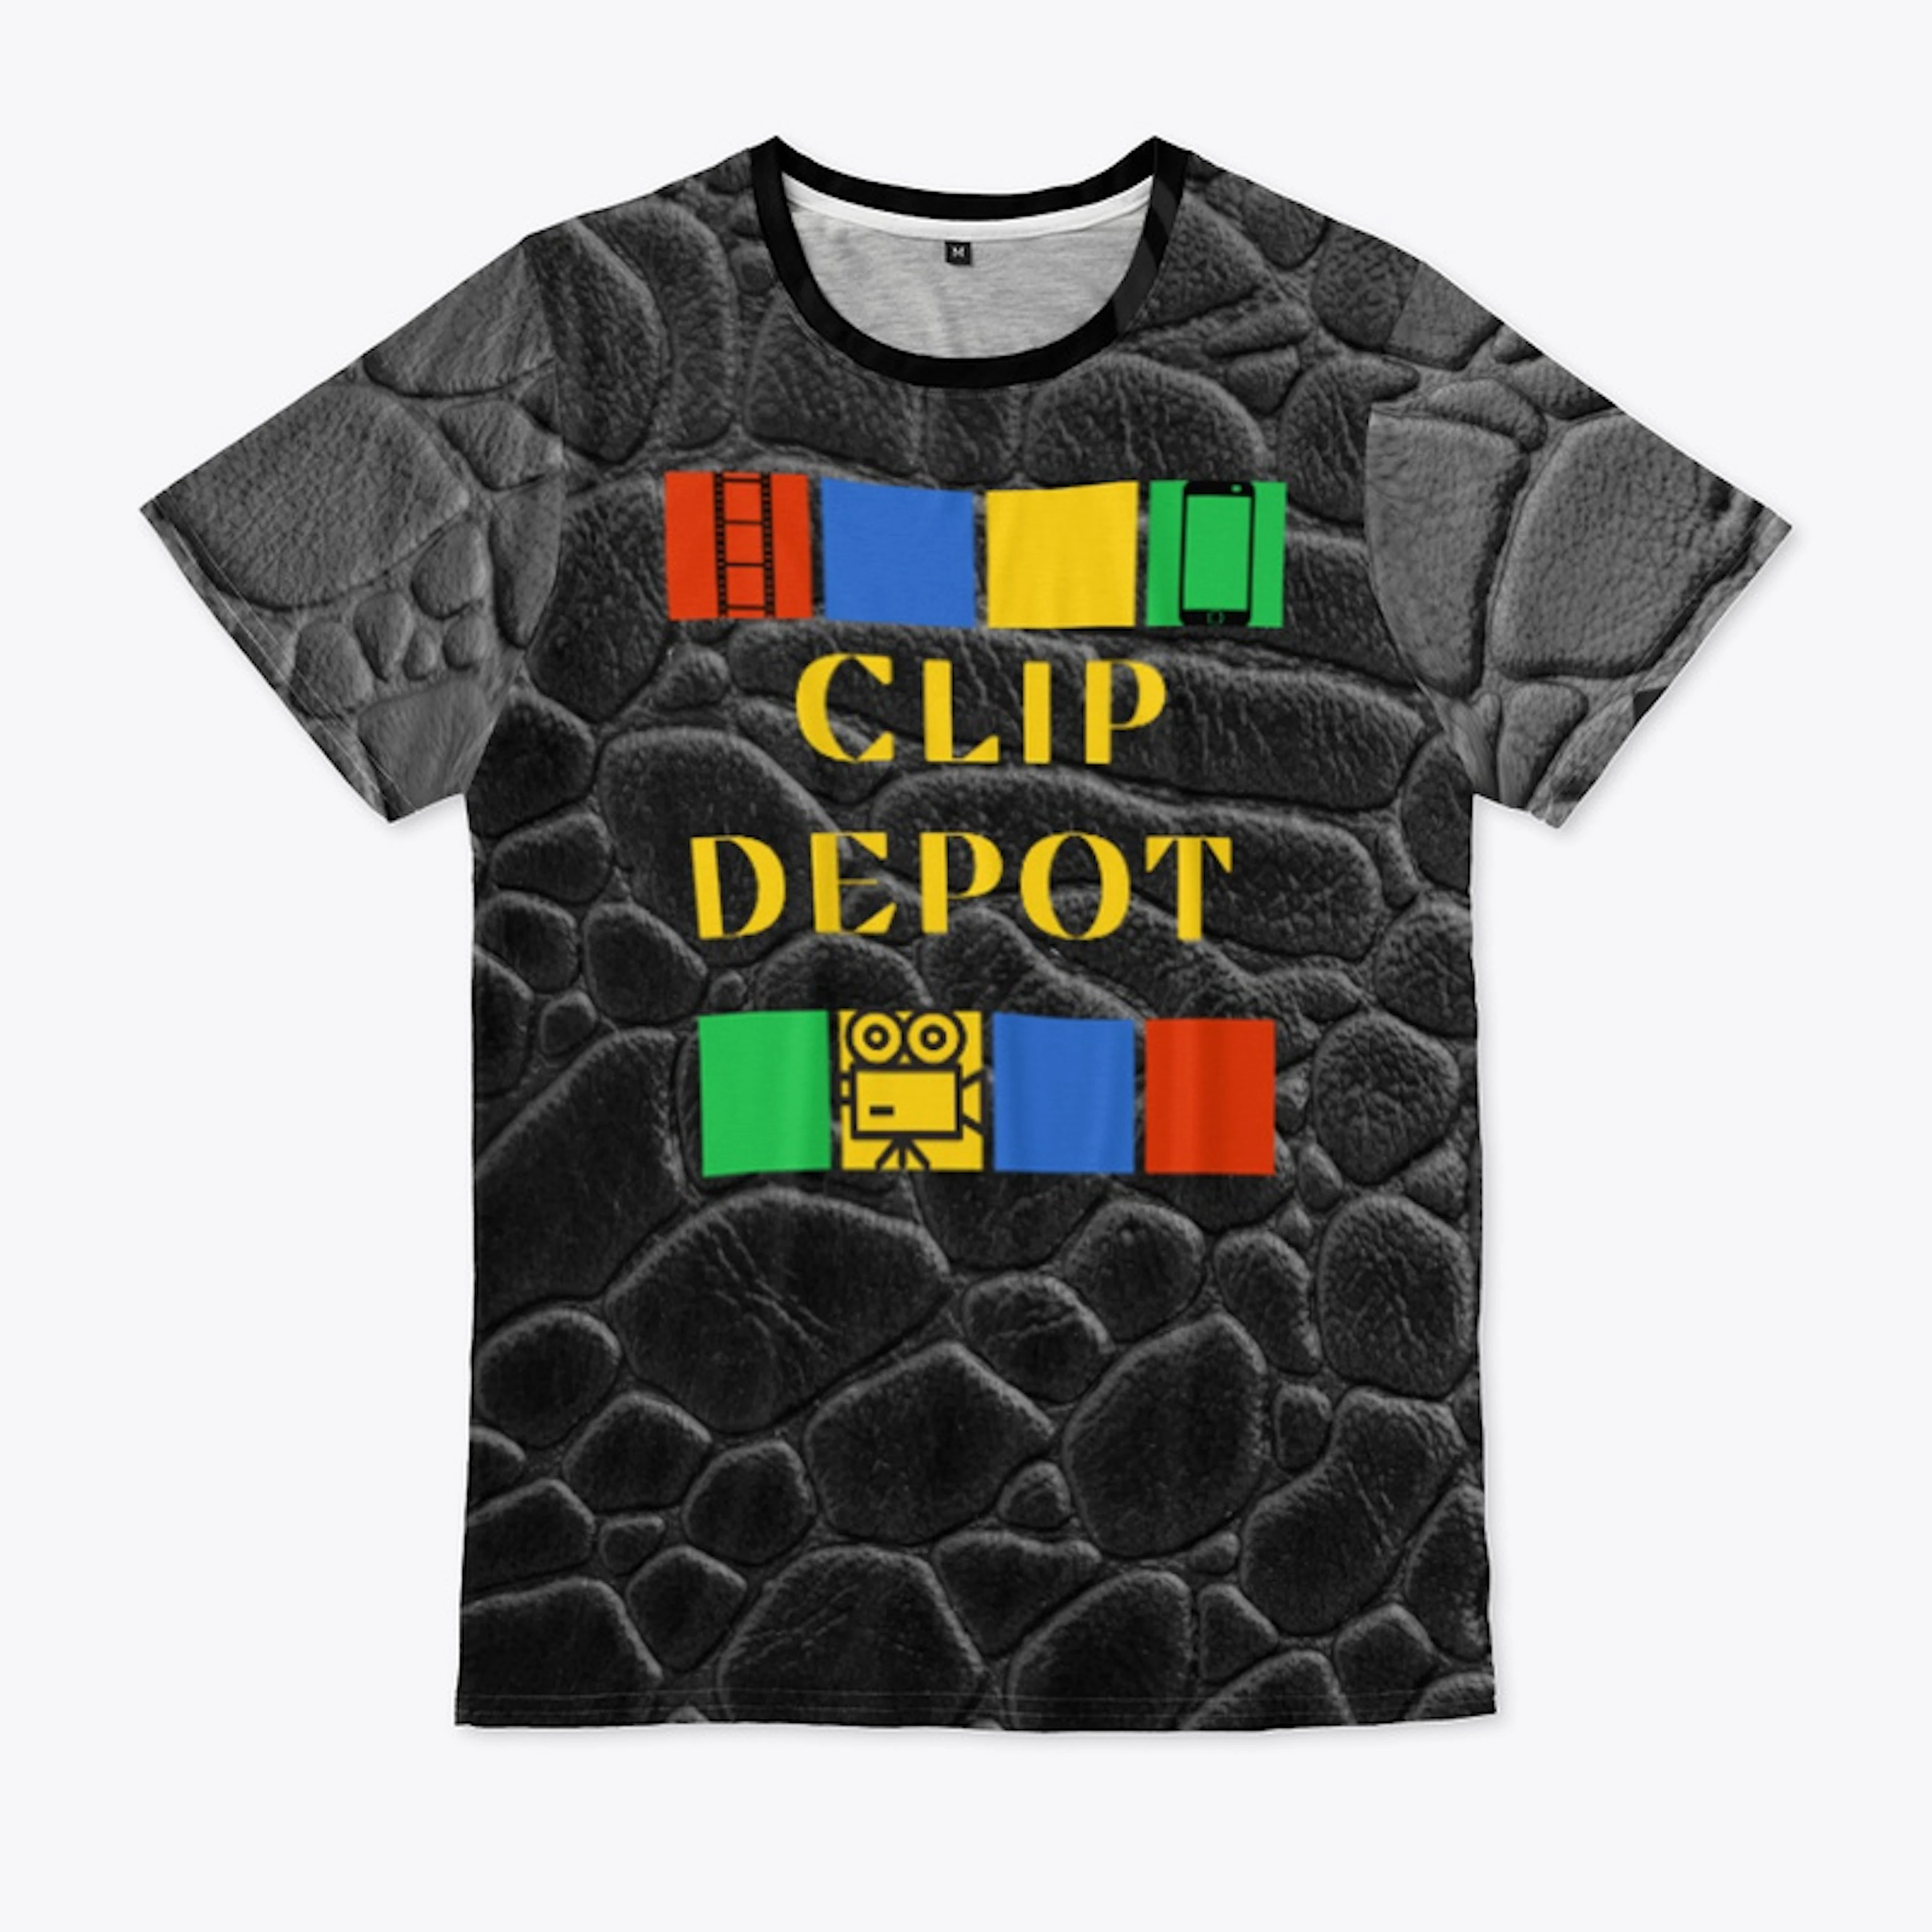 Clip Depot